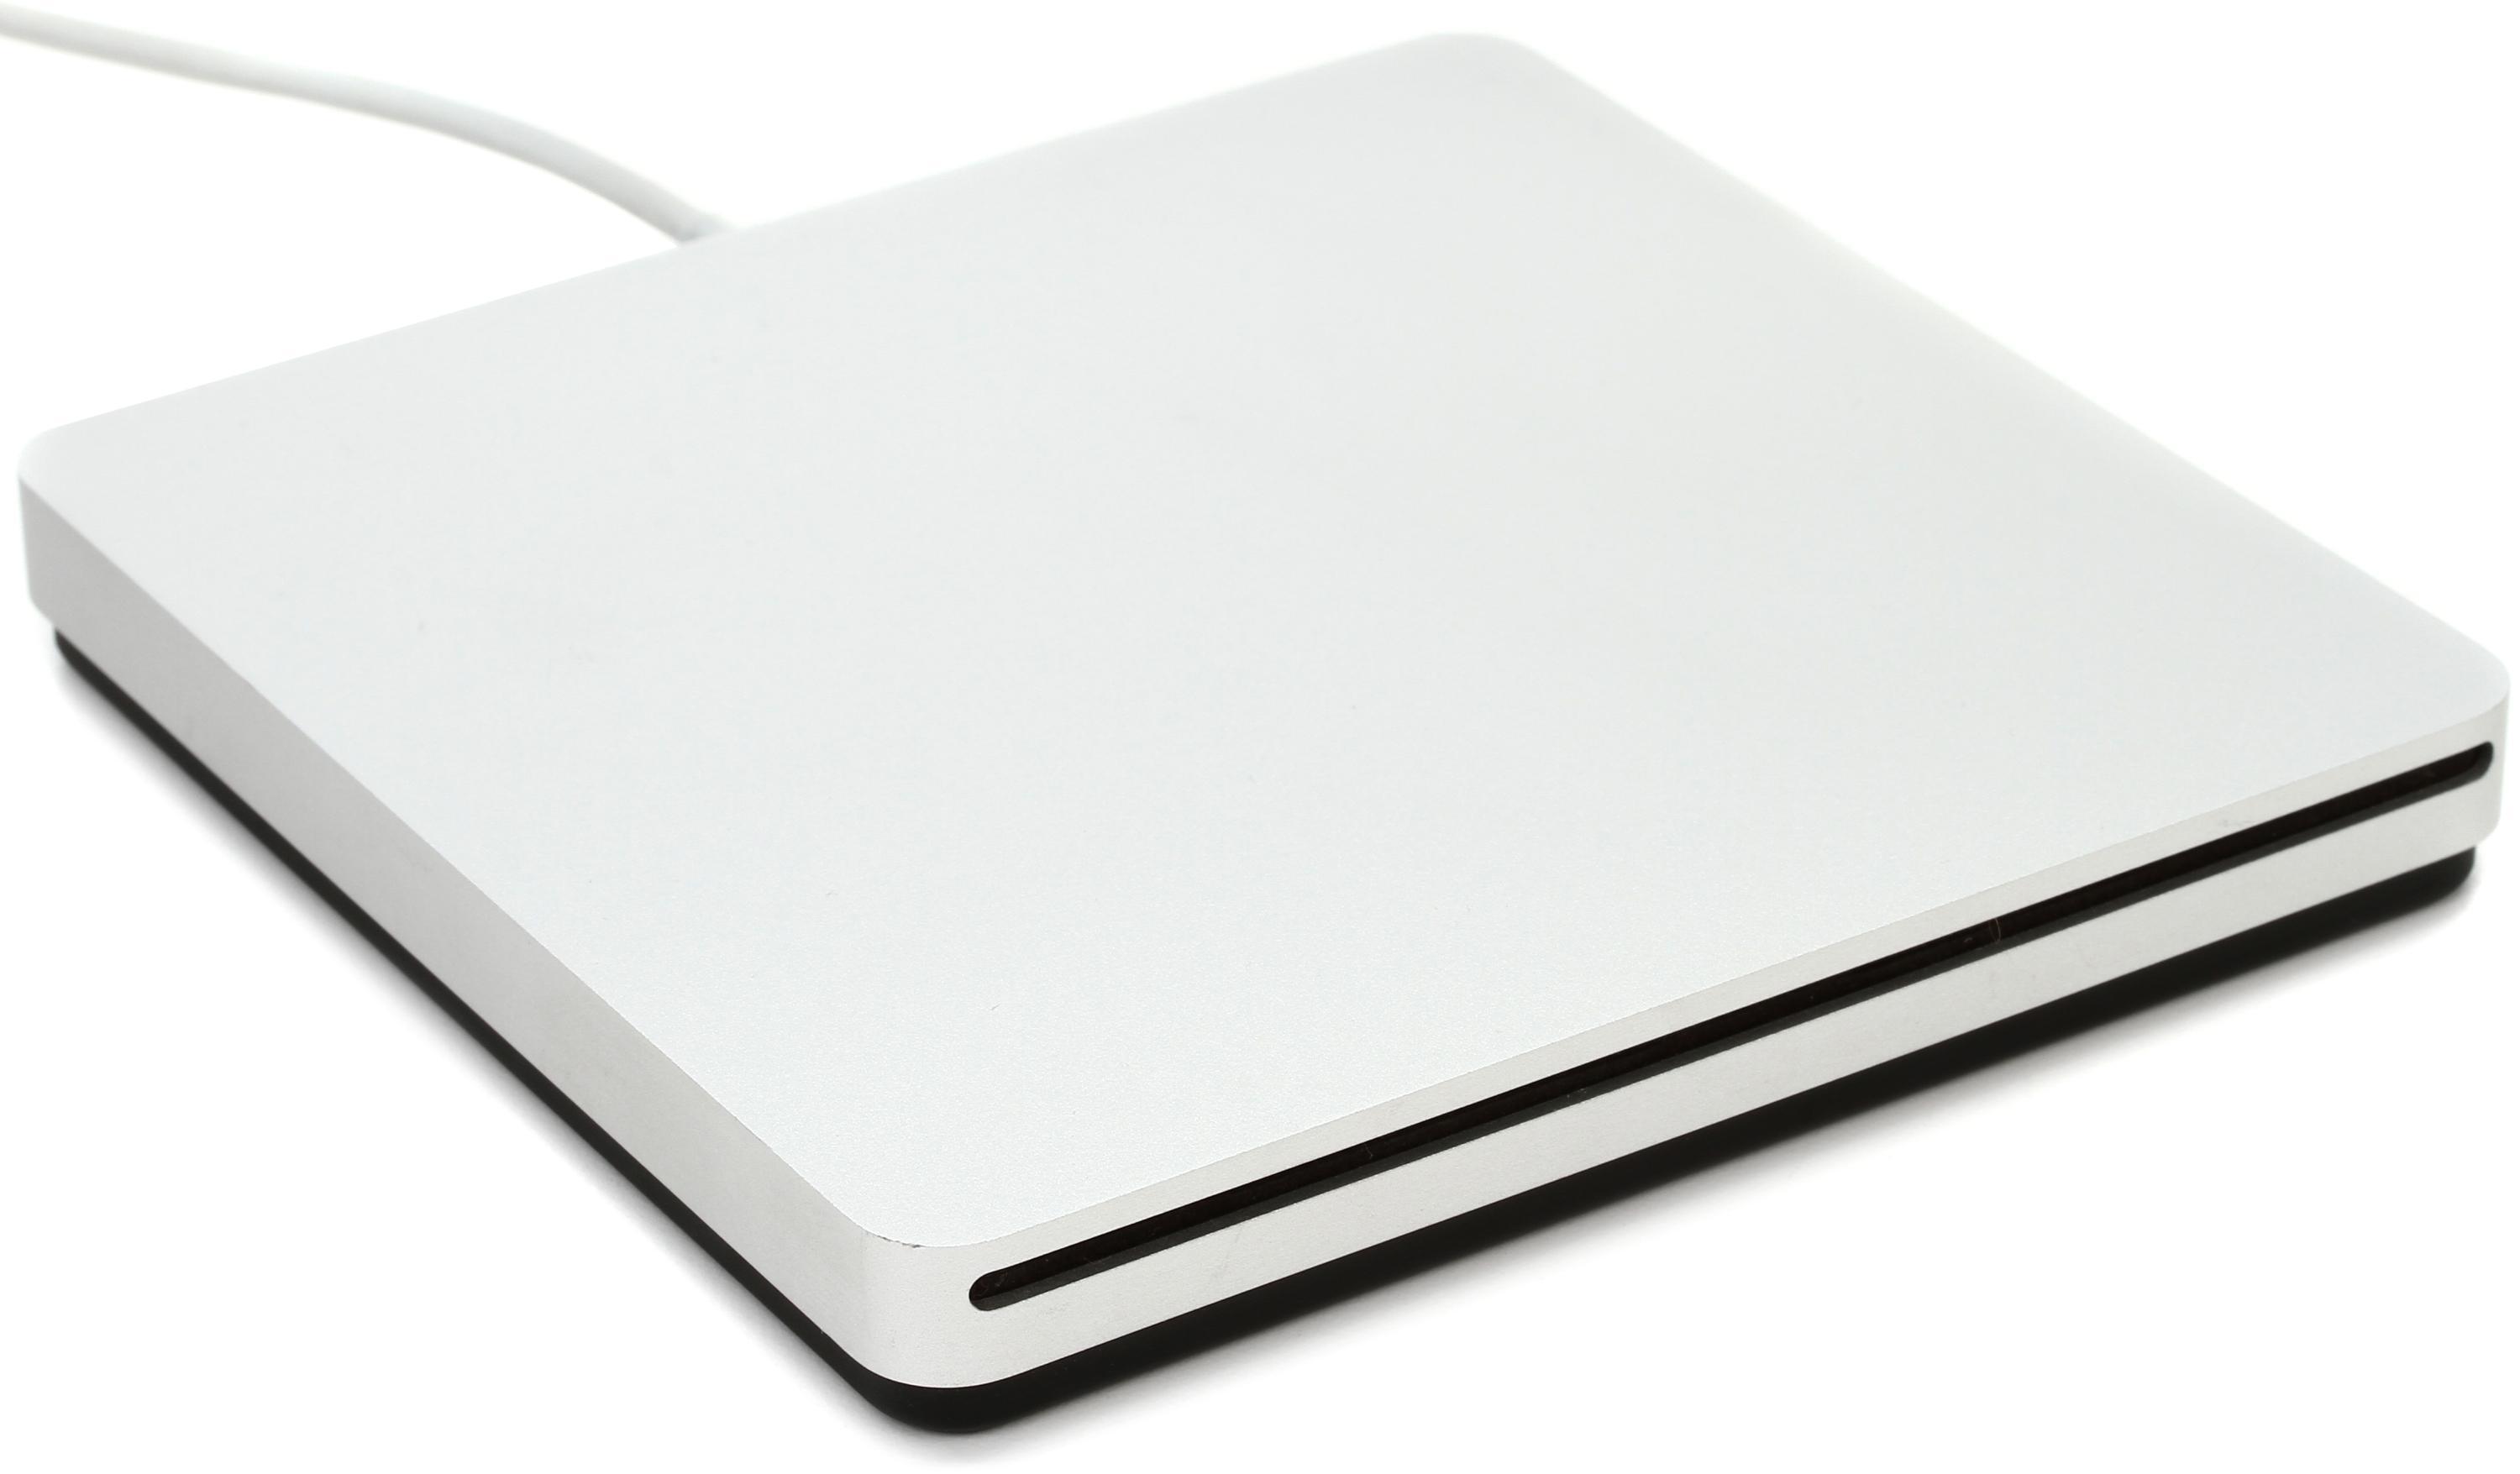 Apple USB SuperDrive External Slim DVD±RW Drive